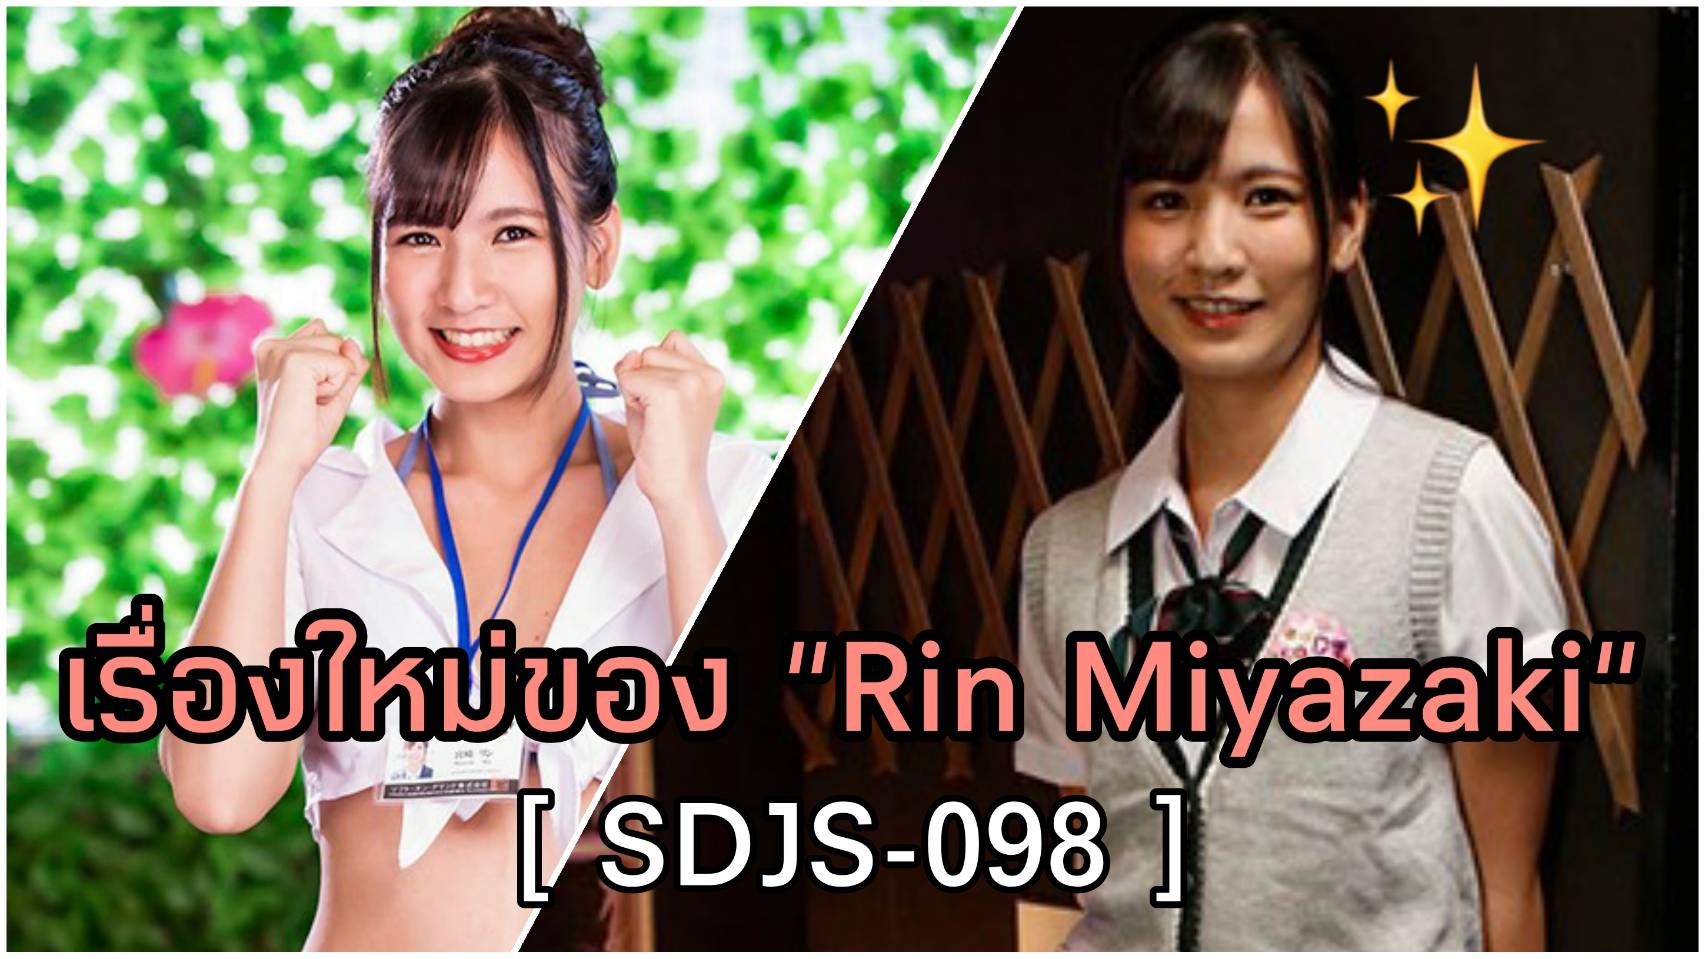 SDJS-098 Rin Miyazaki (ริน มิยาซากิ) หนัง AV เรื่องใหม่ 6